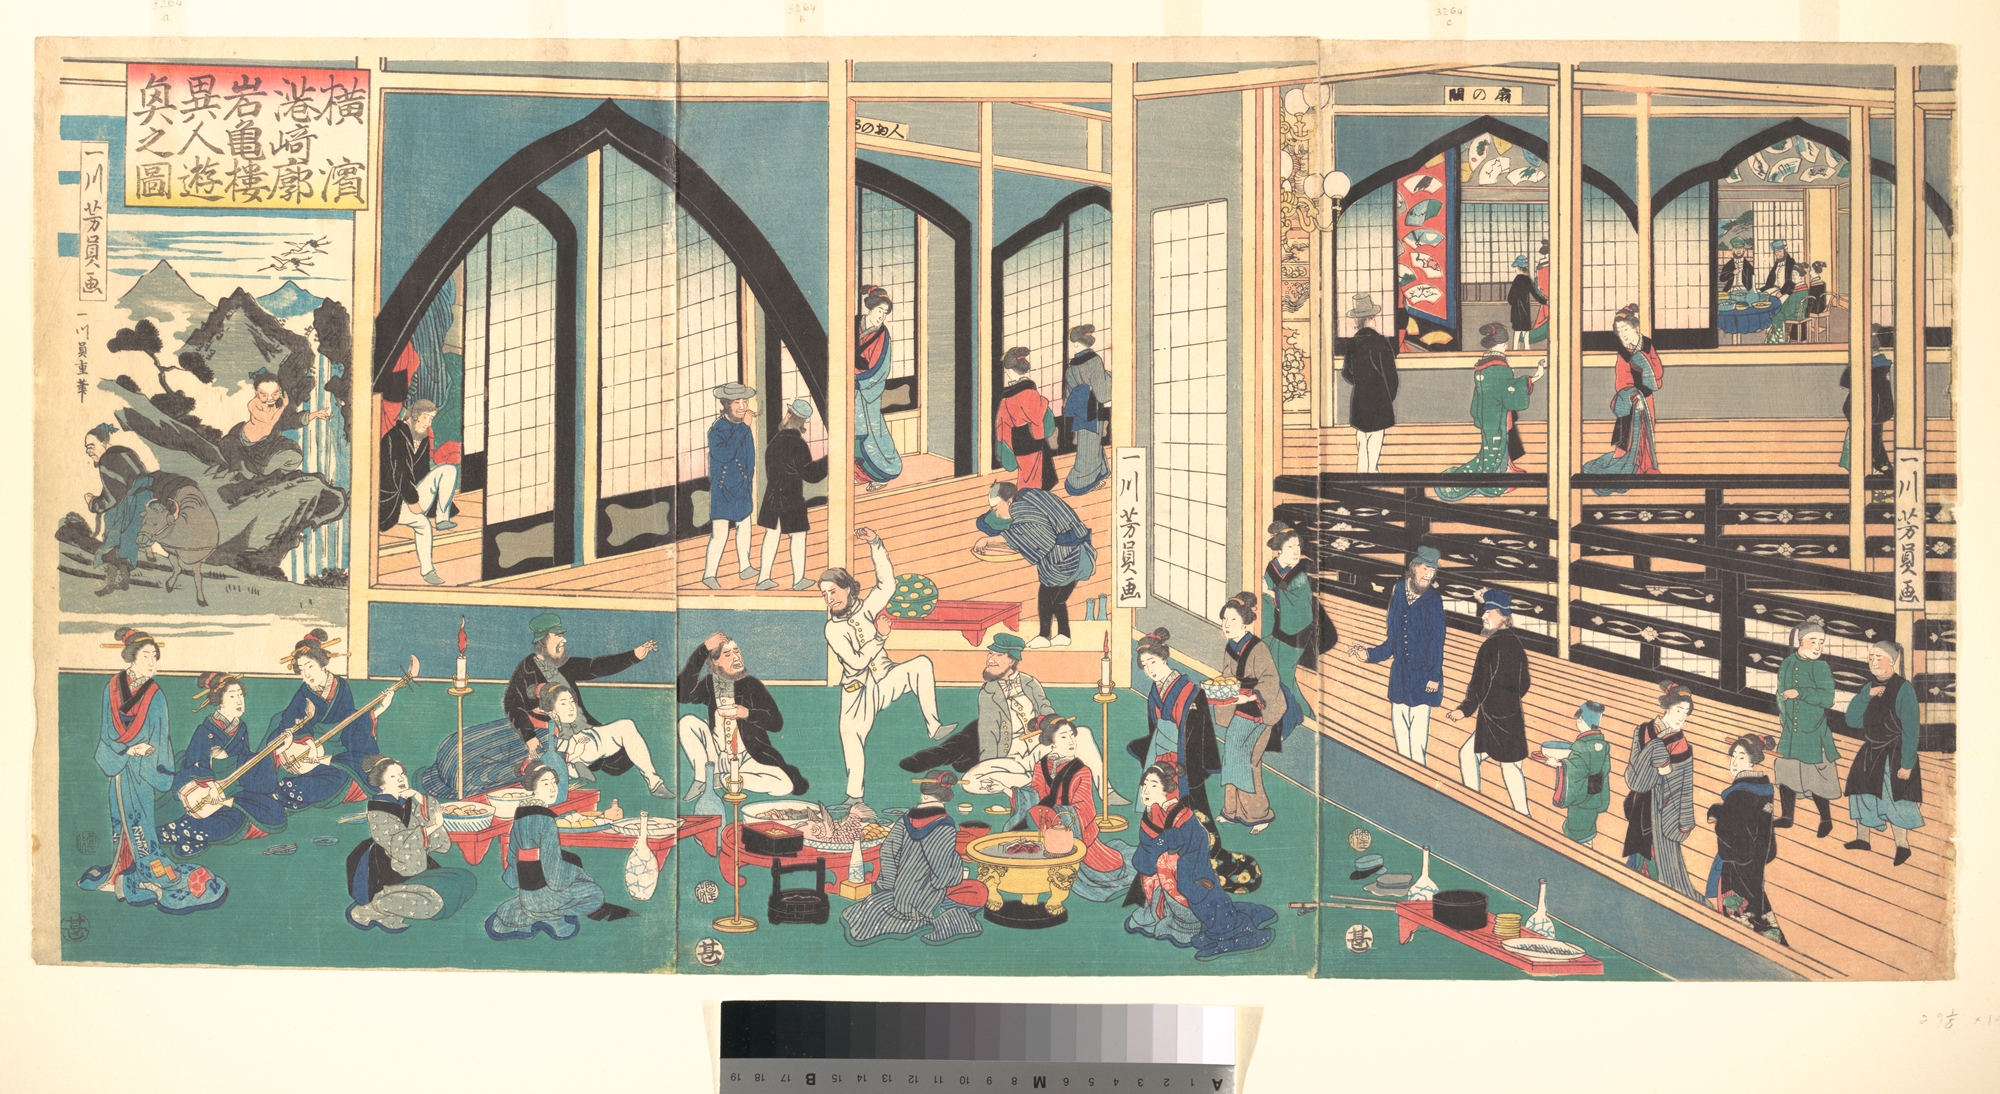 Utagawa Yoshikazu, Foreigners Enjoying Themselves in the Gankirō, ink and color on paper, ca. 1861 (Metropolitan Museum of Art, New York). Photo: Public Domain.